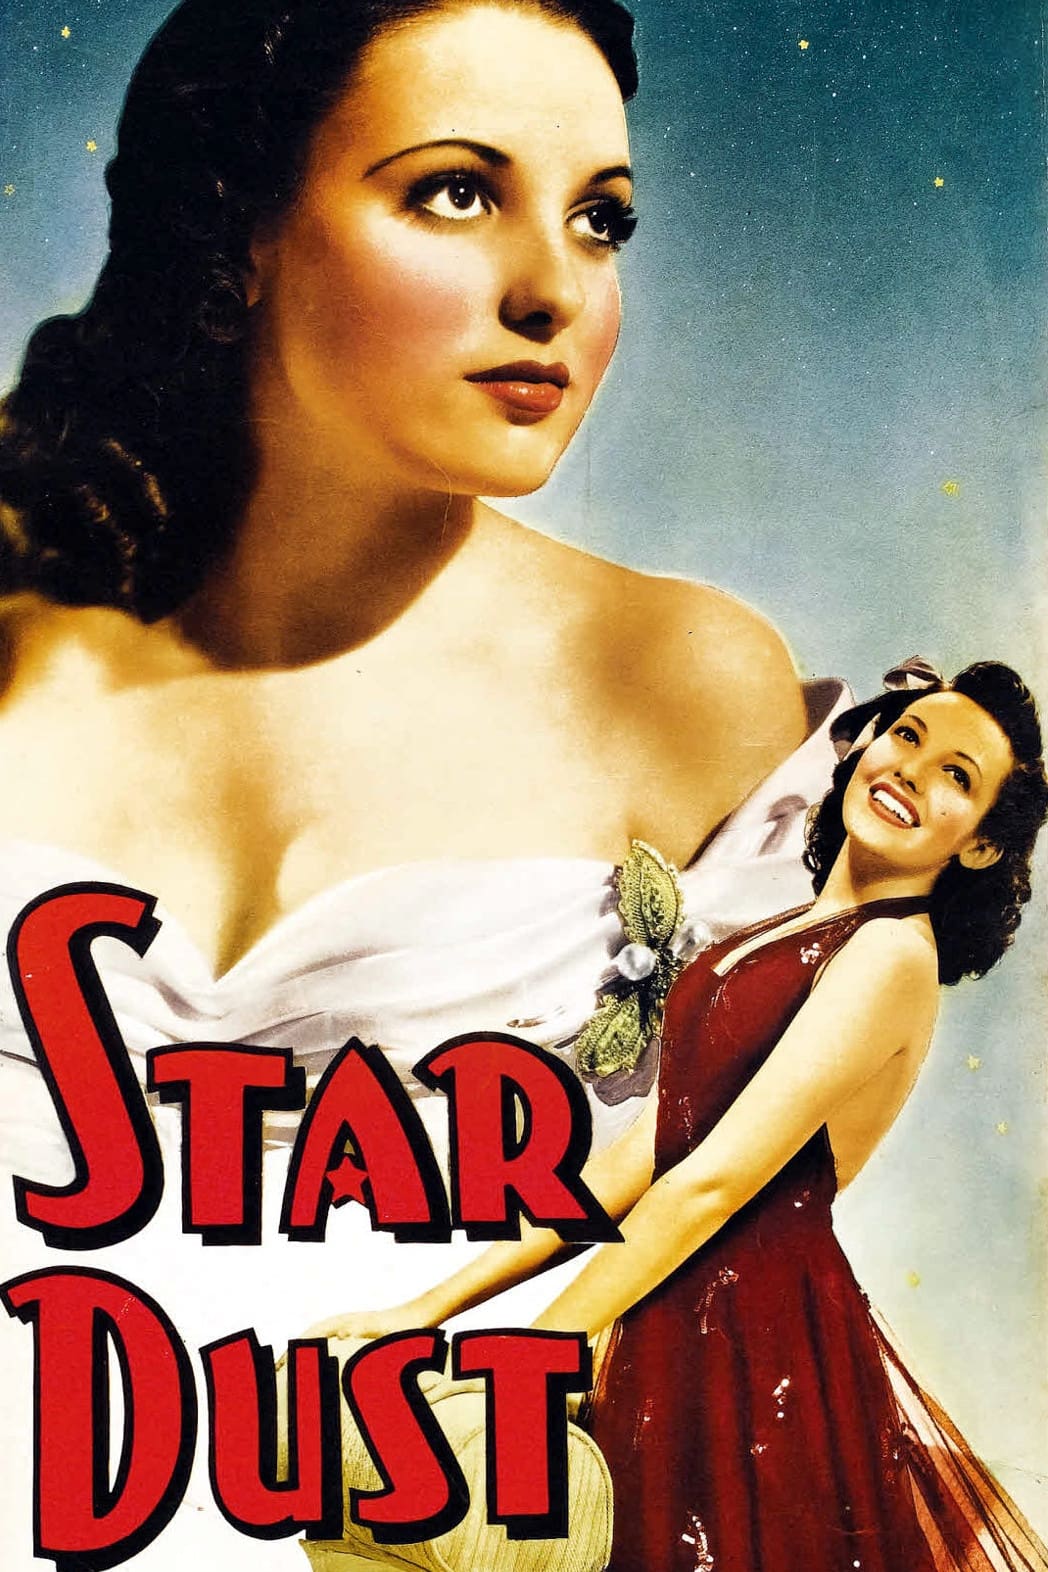 Star Dust (1940)